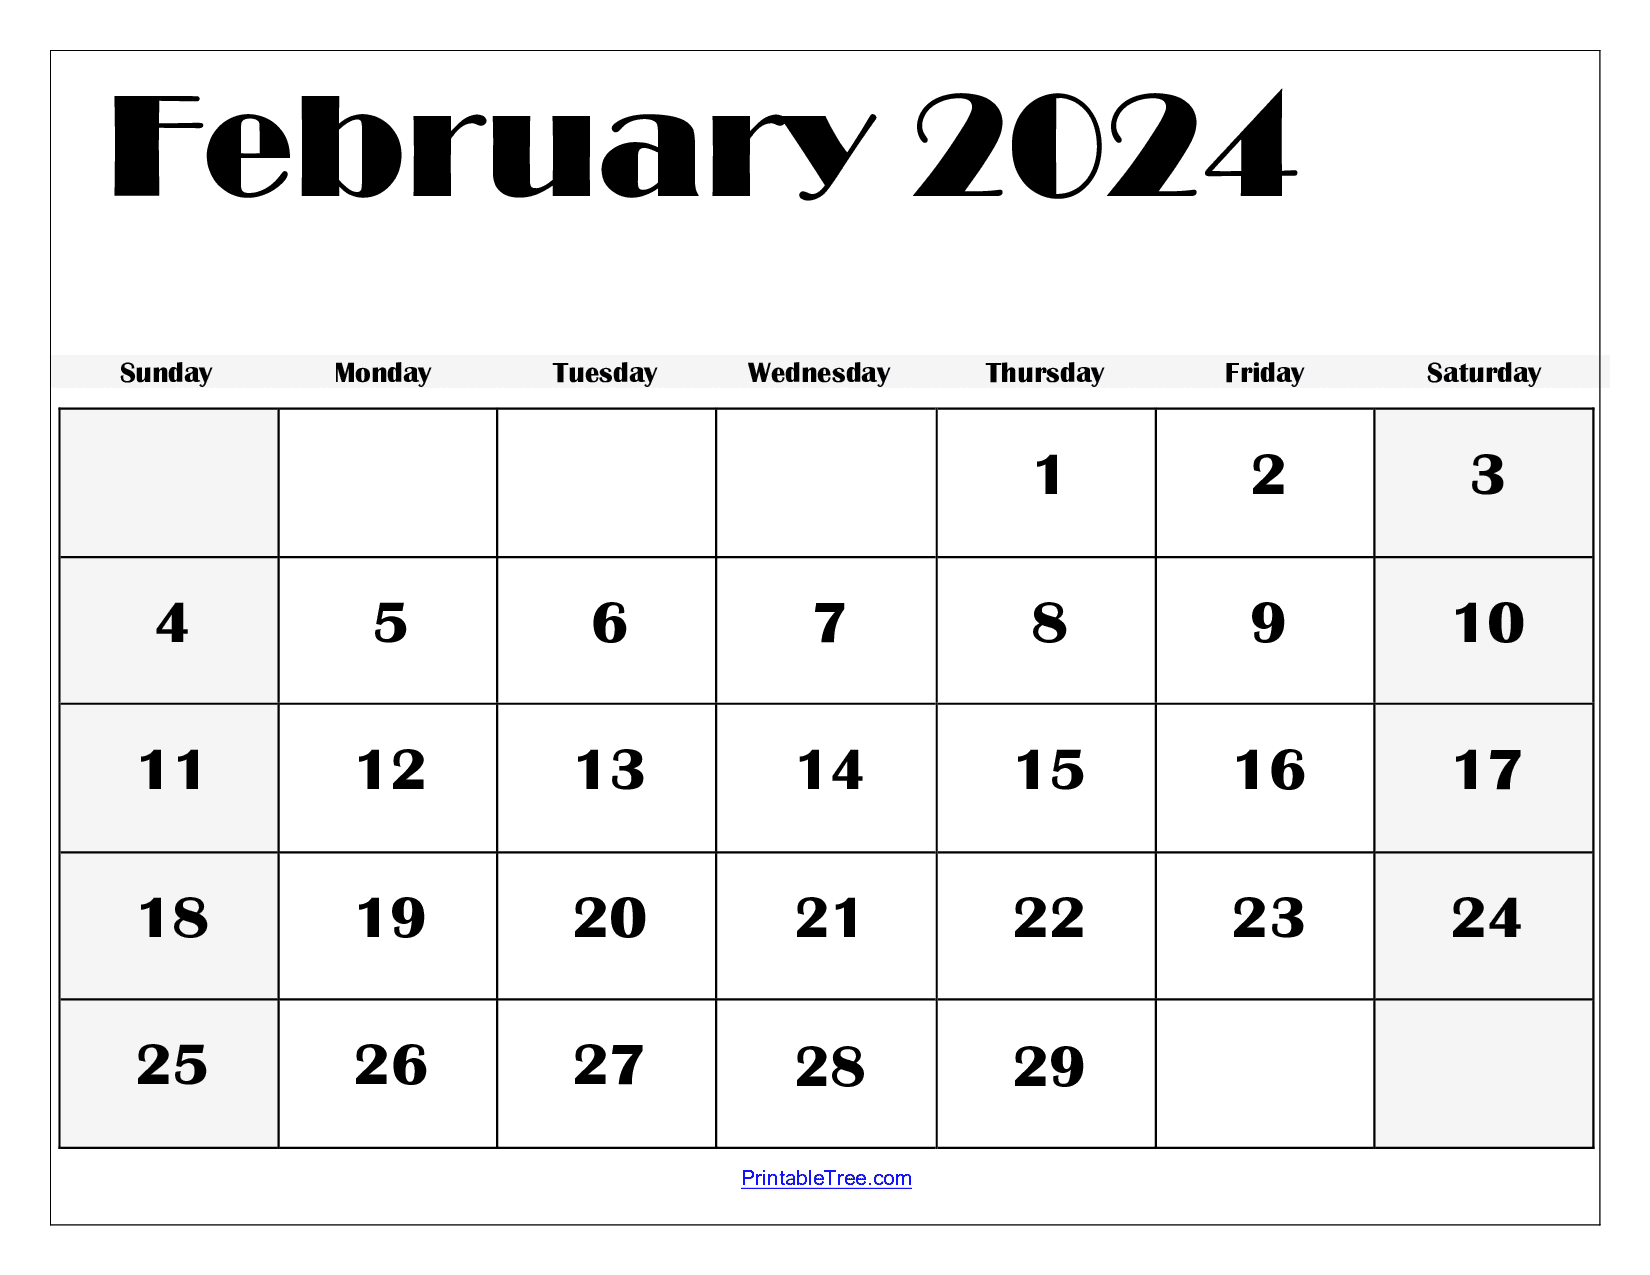 February 2024 Calendar Printable Pdf Template With Holidays for Free-Printable-Calendar February 2024